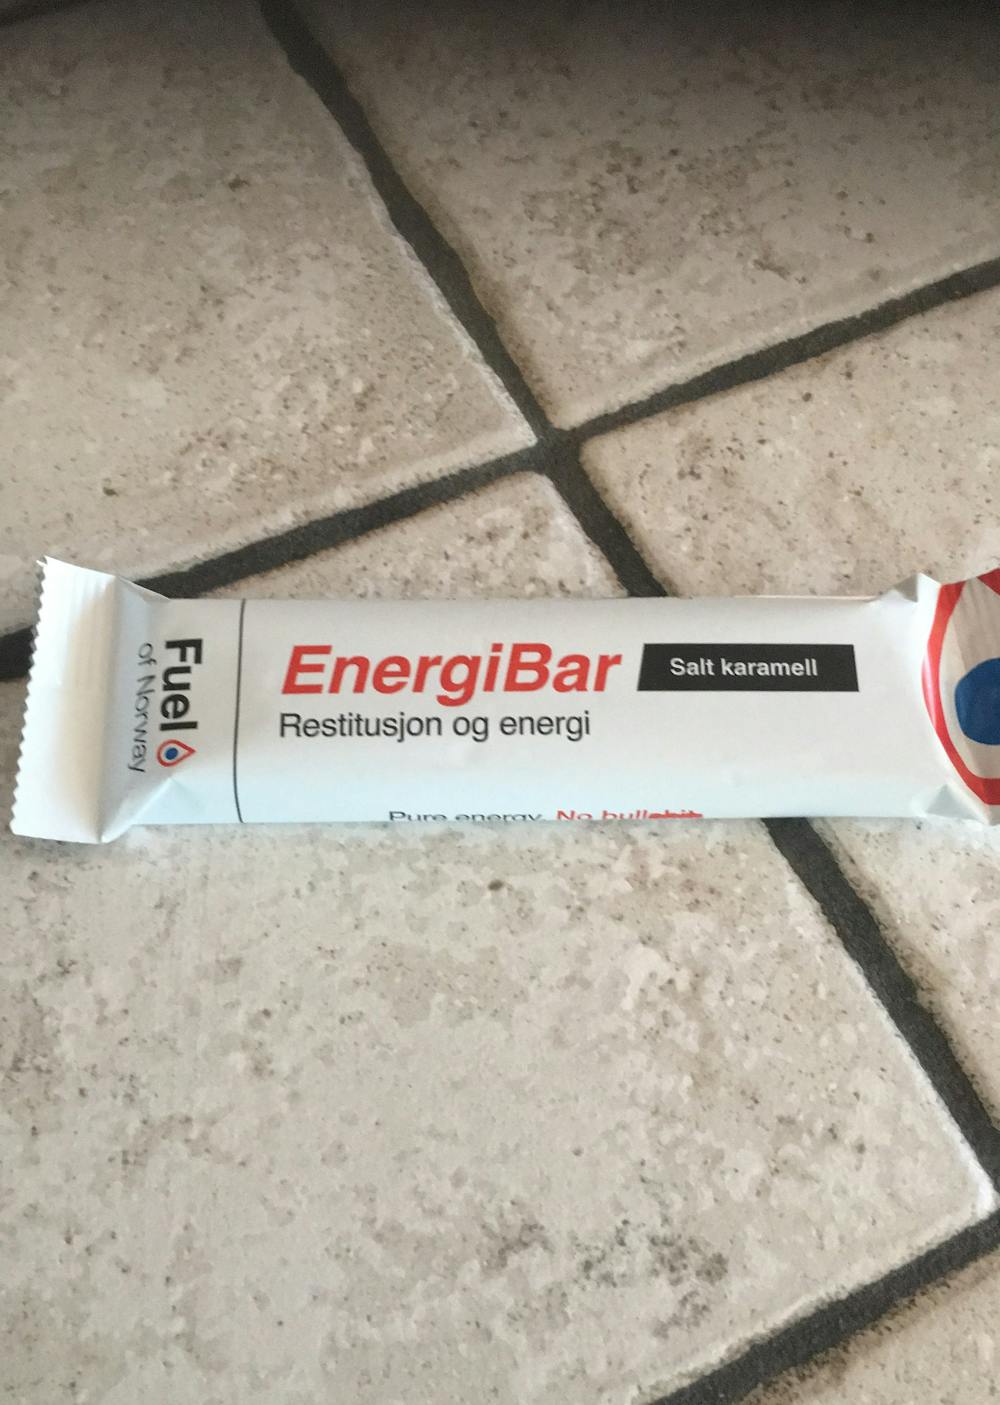 EnergiBar, salt karamell, Fuel of Norway